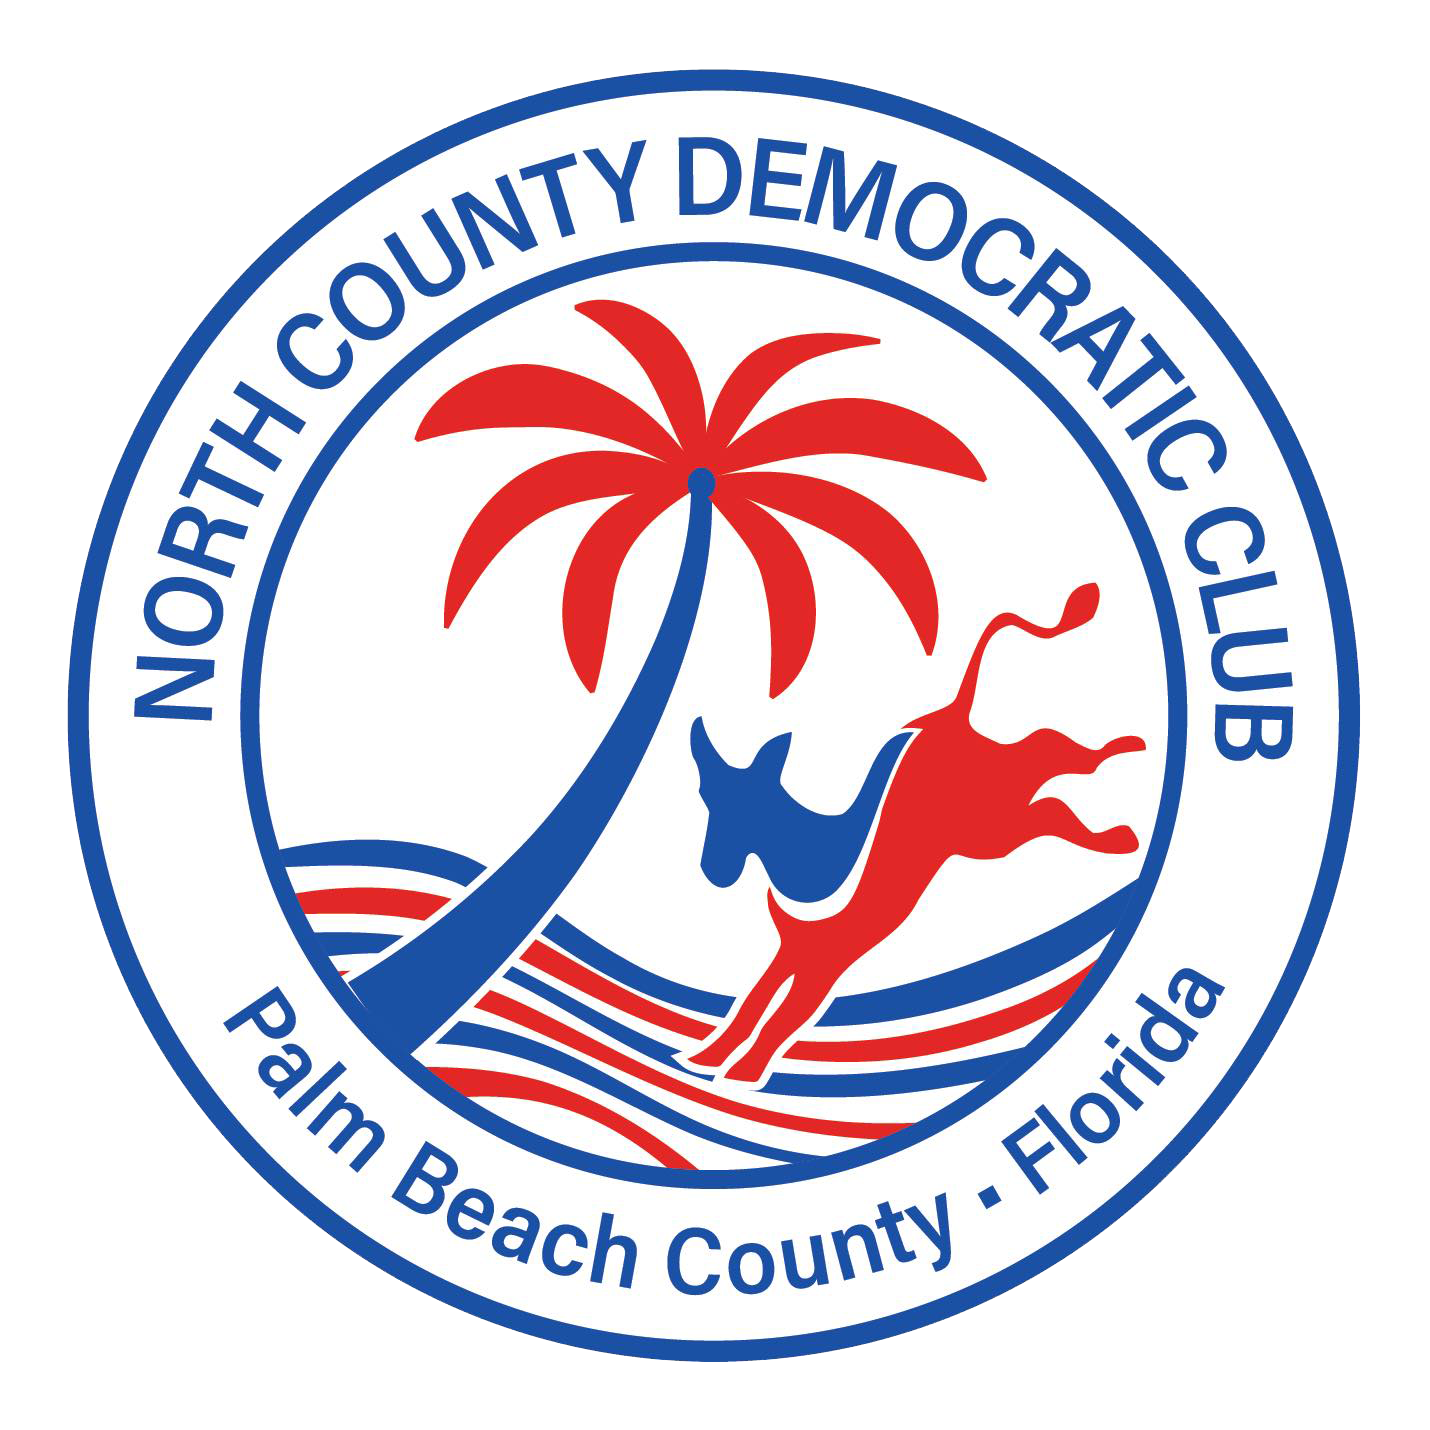 North County Democratic Club